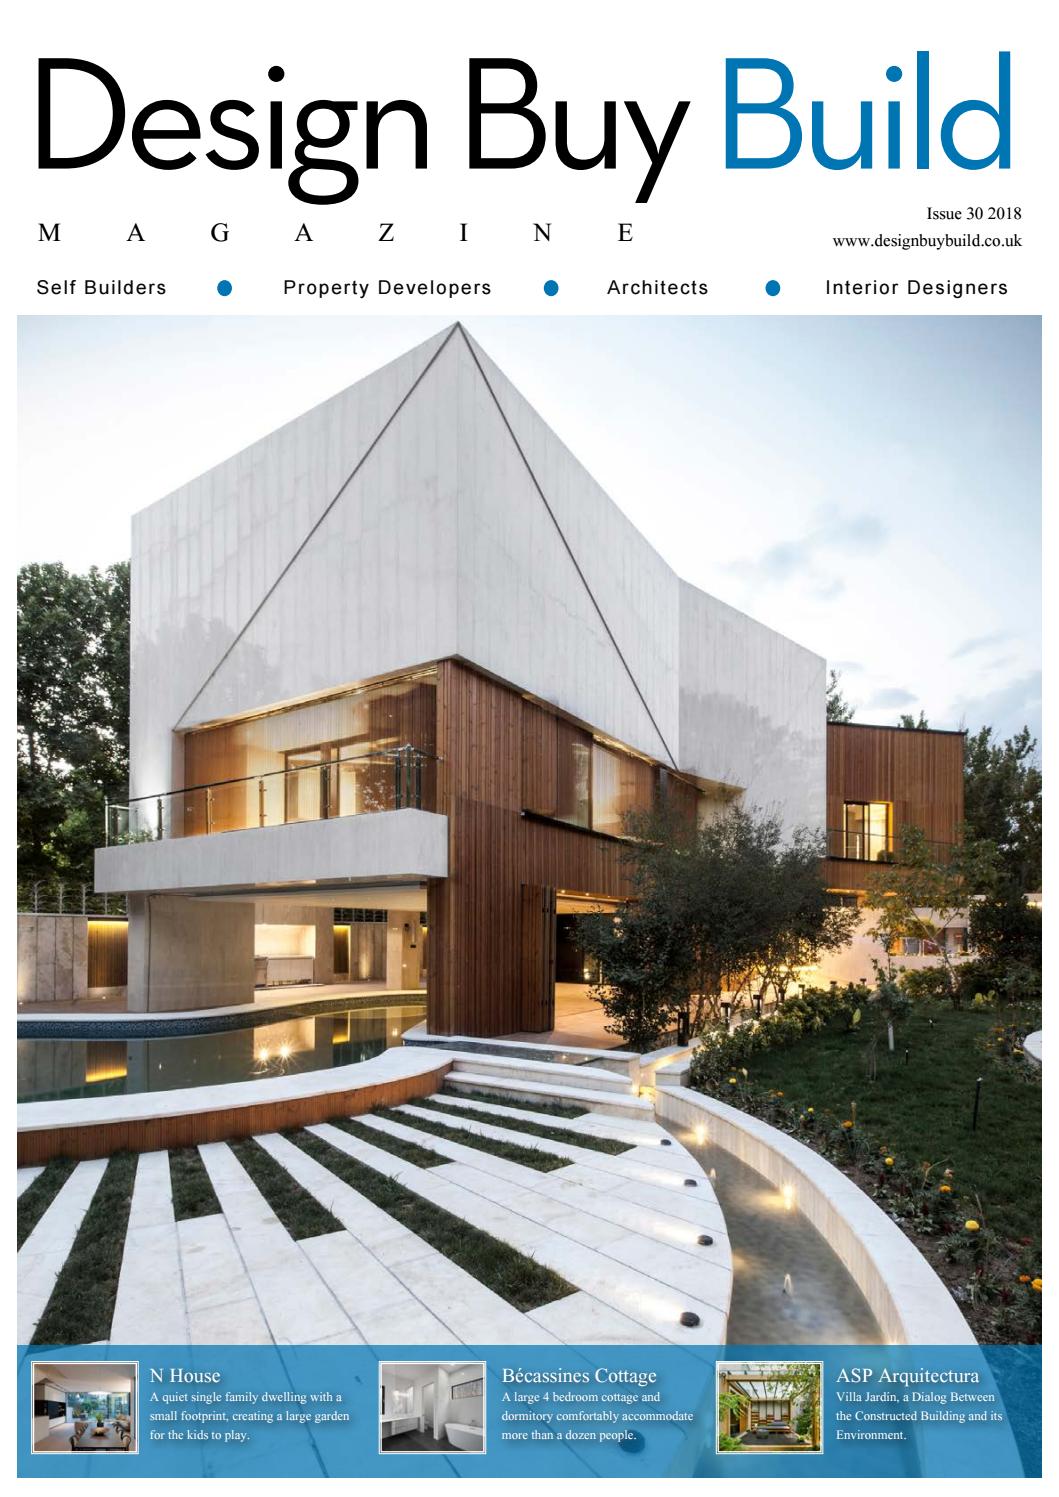 Salon De Jardin Aluminium Et Composite Beau Design Buy Build issue 30 2018 by Mh Media Global issuu